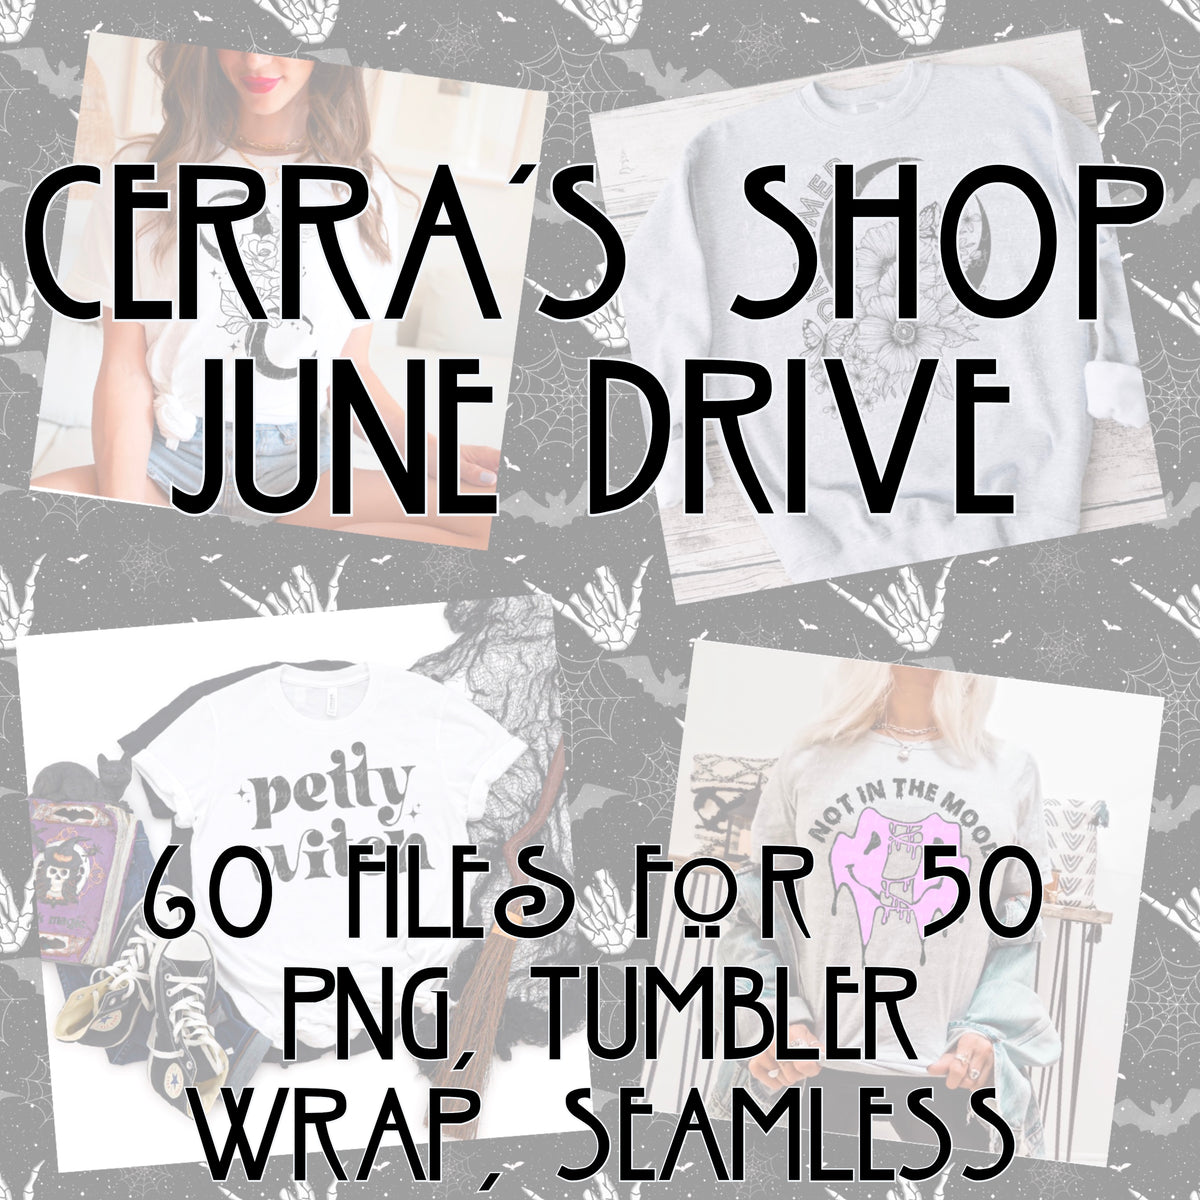 June Drive  Cerra's Shop Creates   